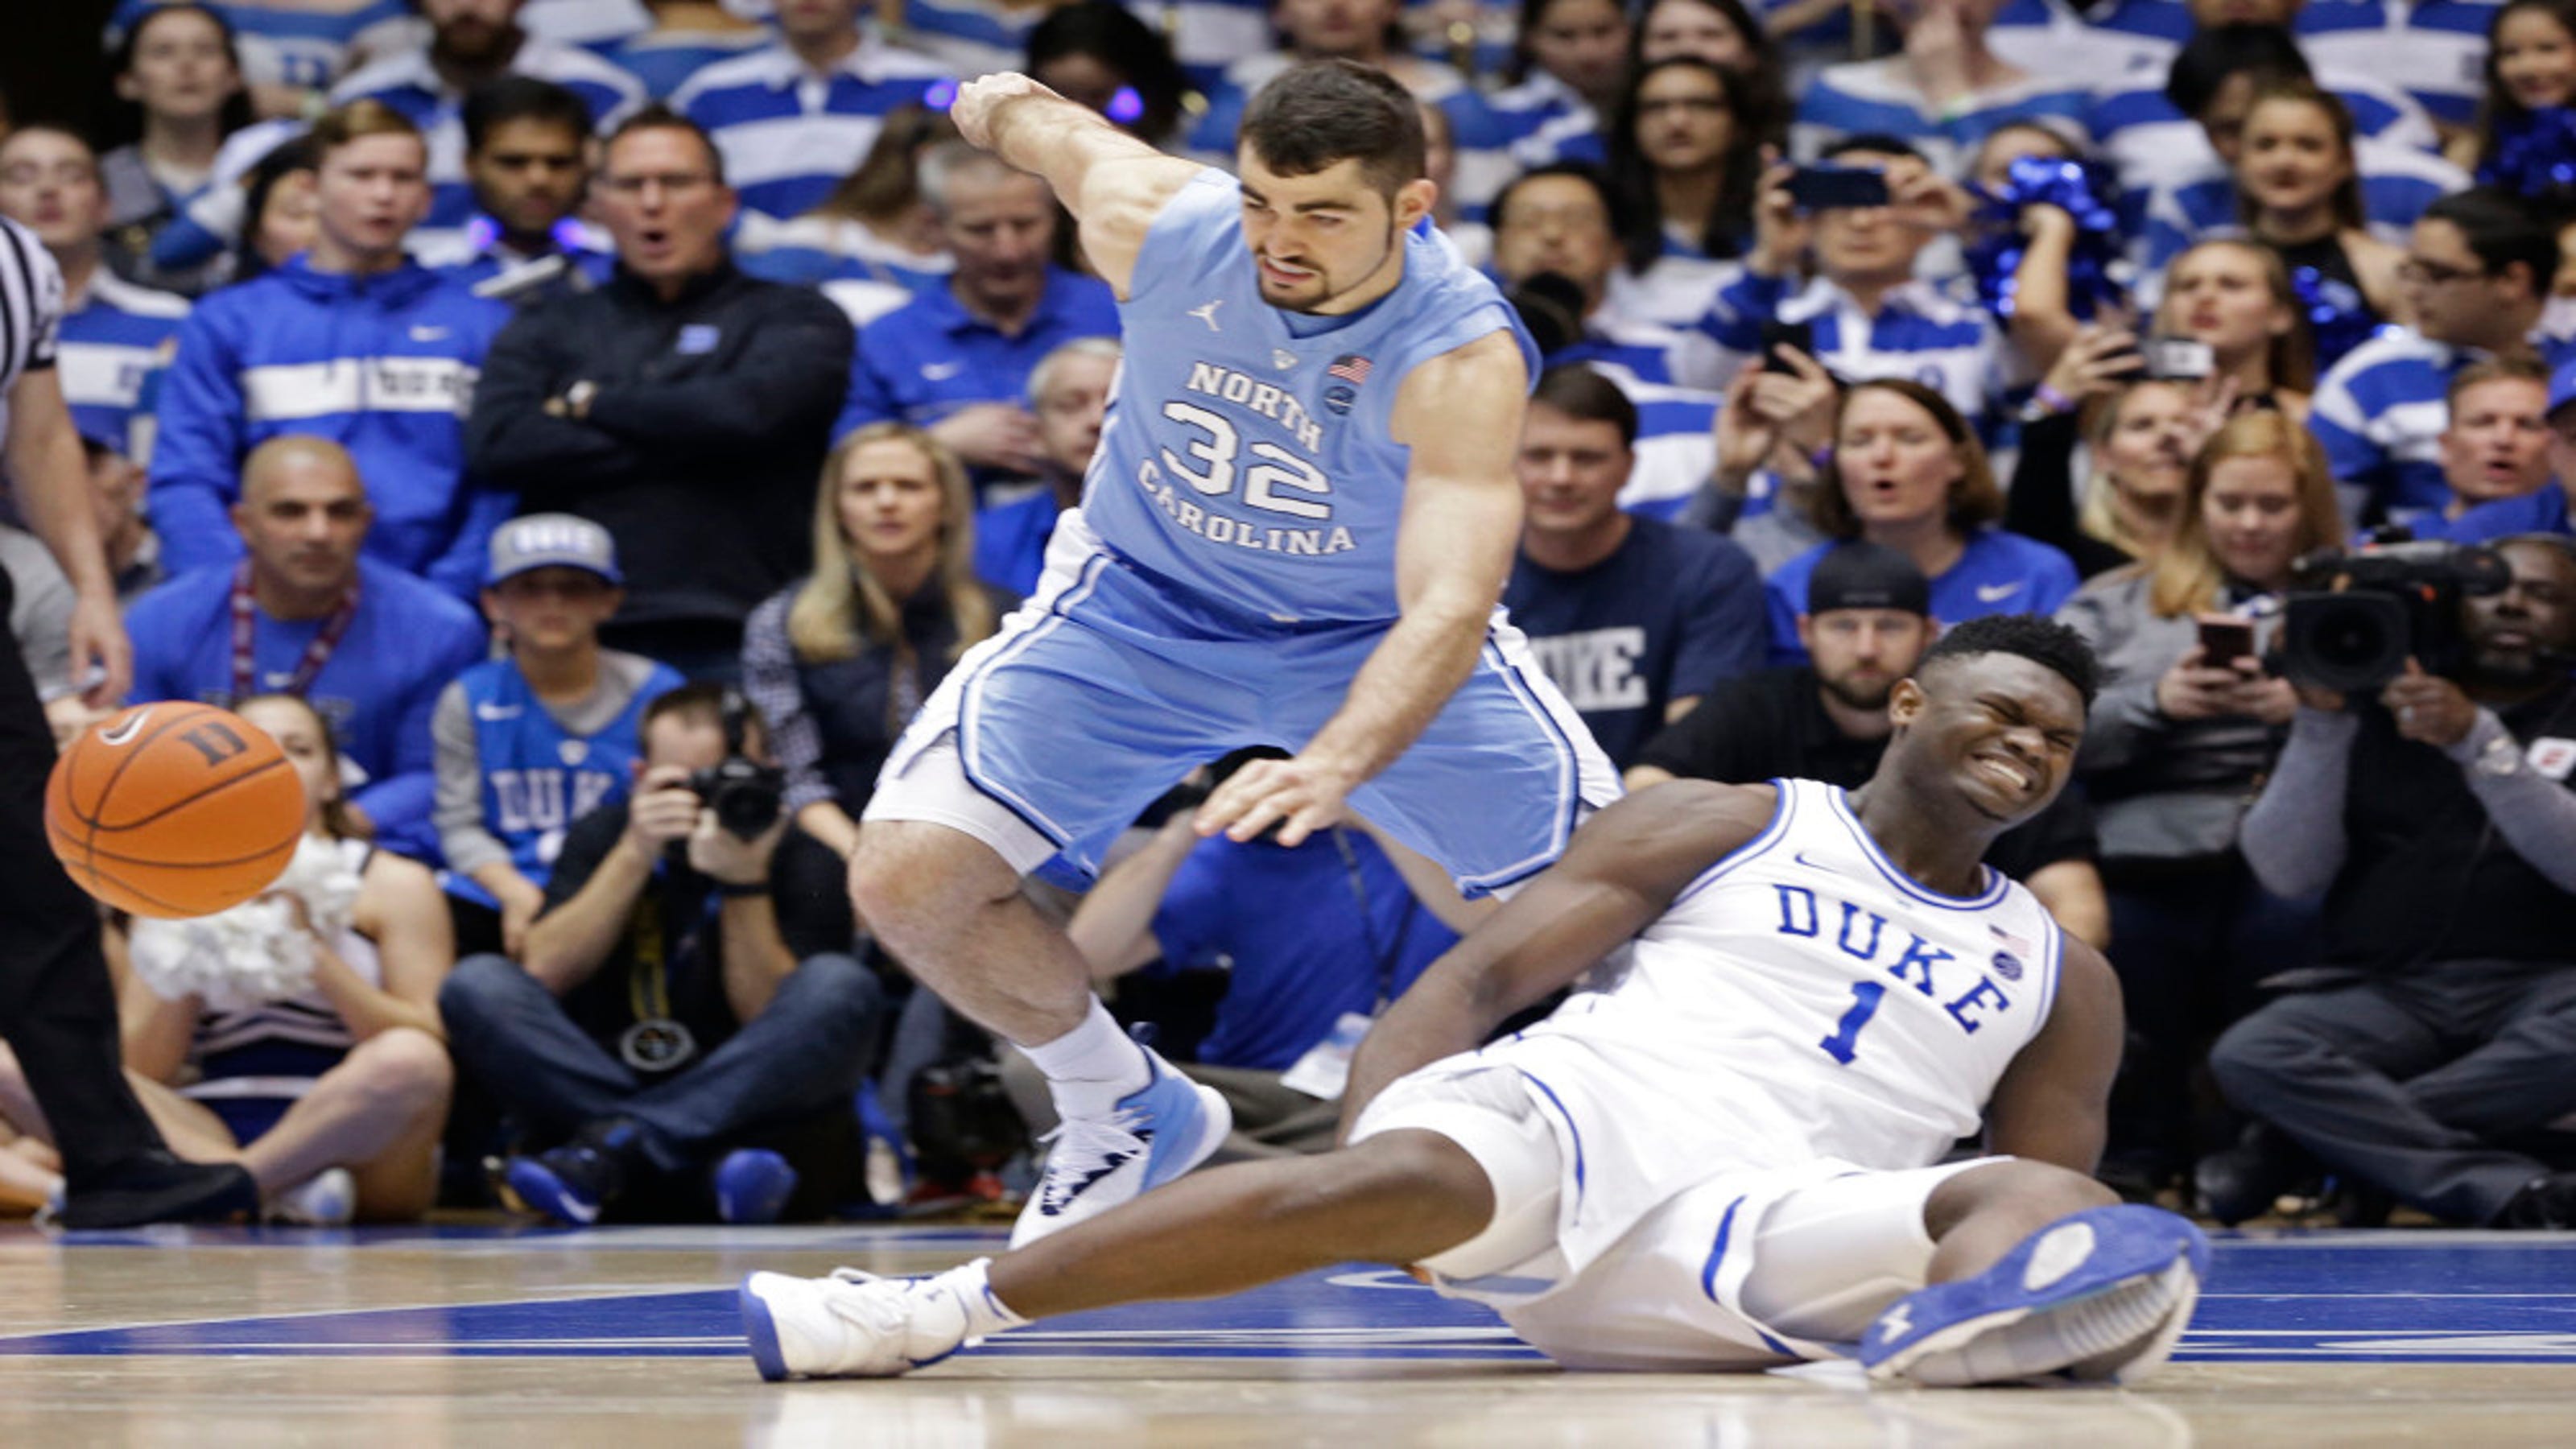 How Zion's injury impacts Duke's title run